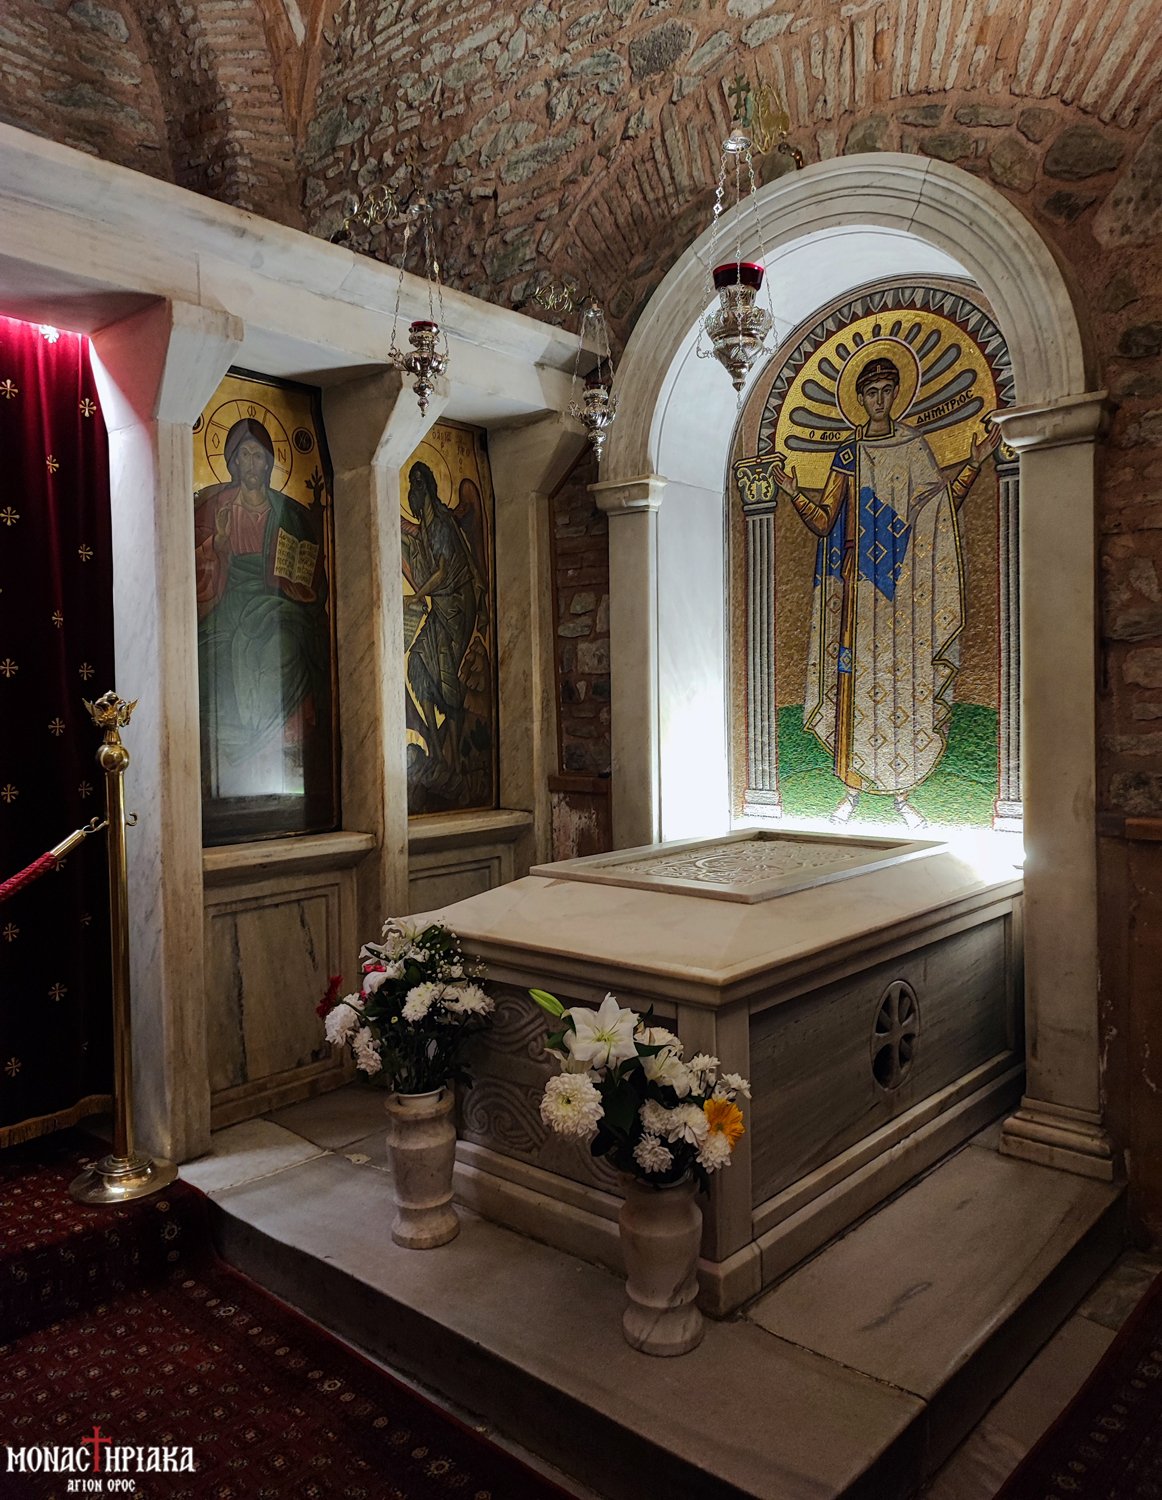 The tomb of Saint Demetrius